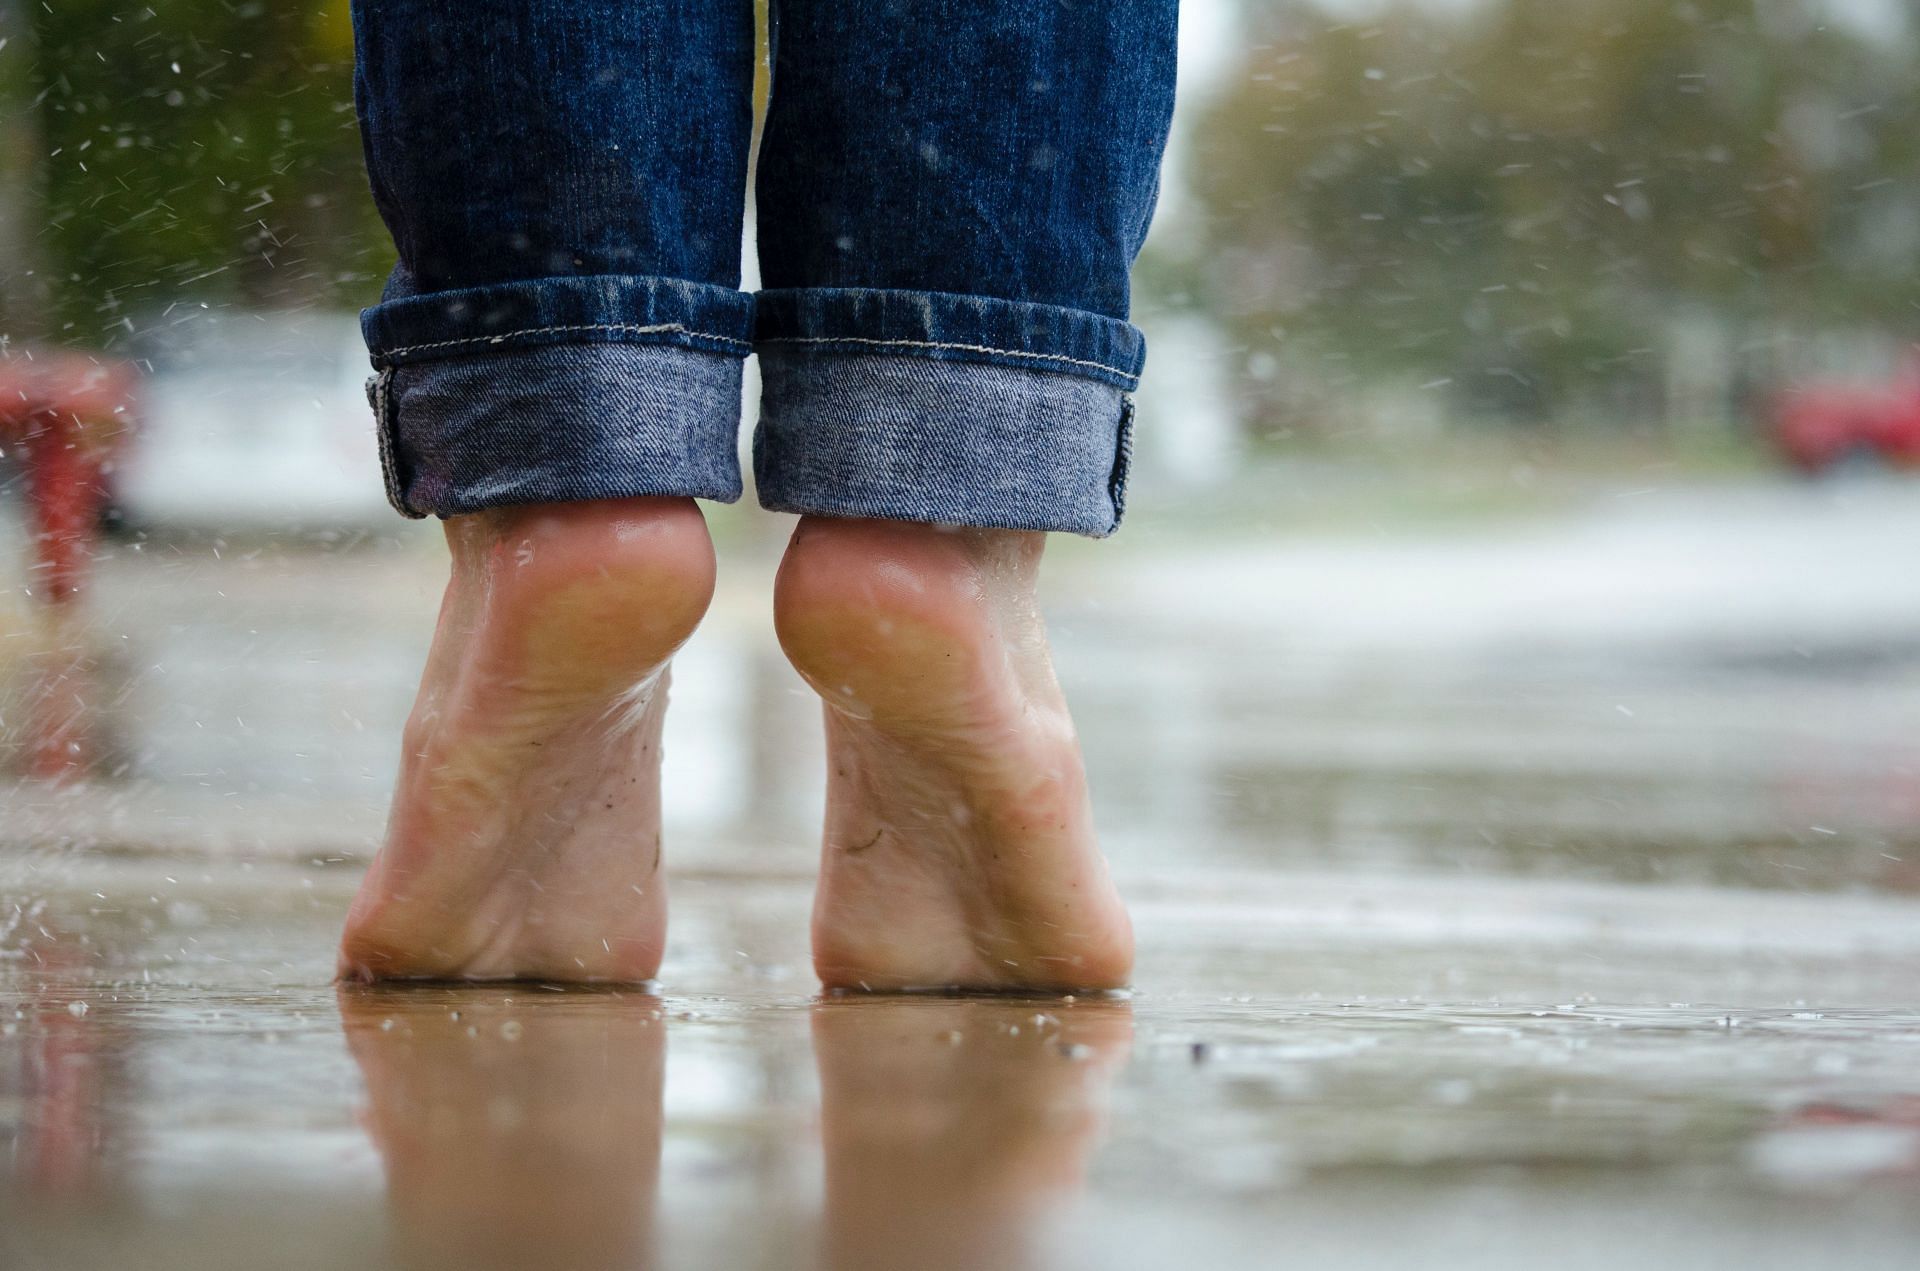 Barefoot walking (Image via Pexels/Alicia Zinn)